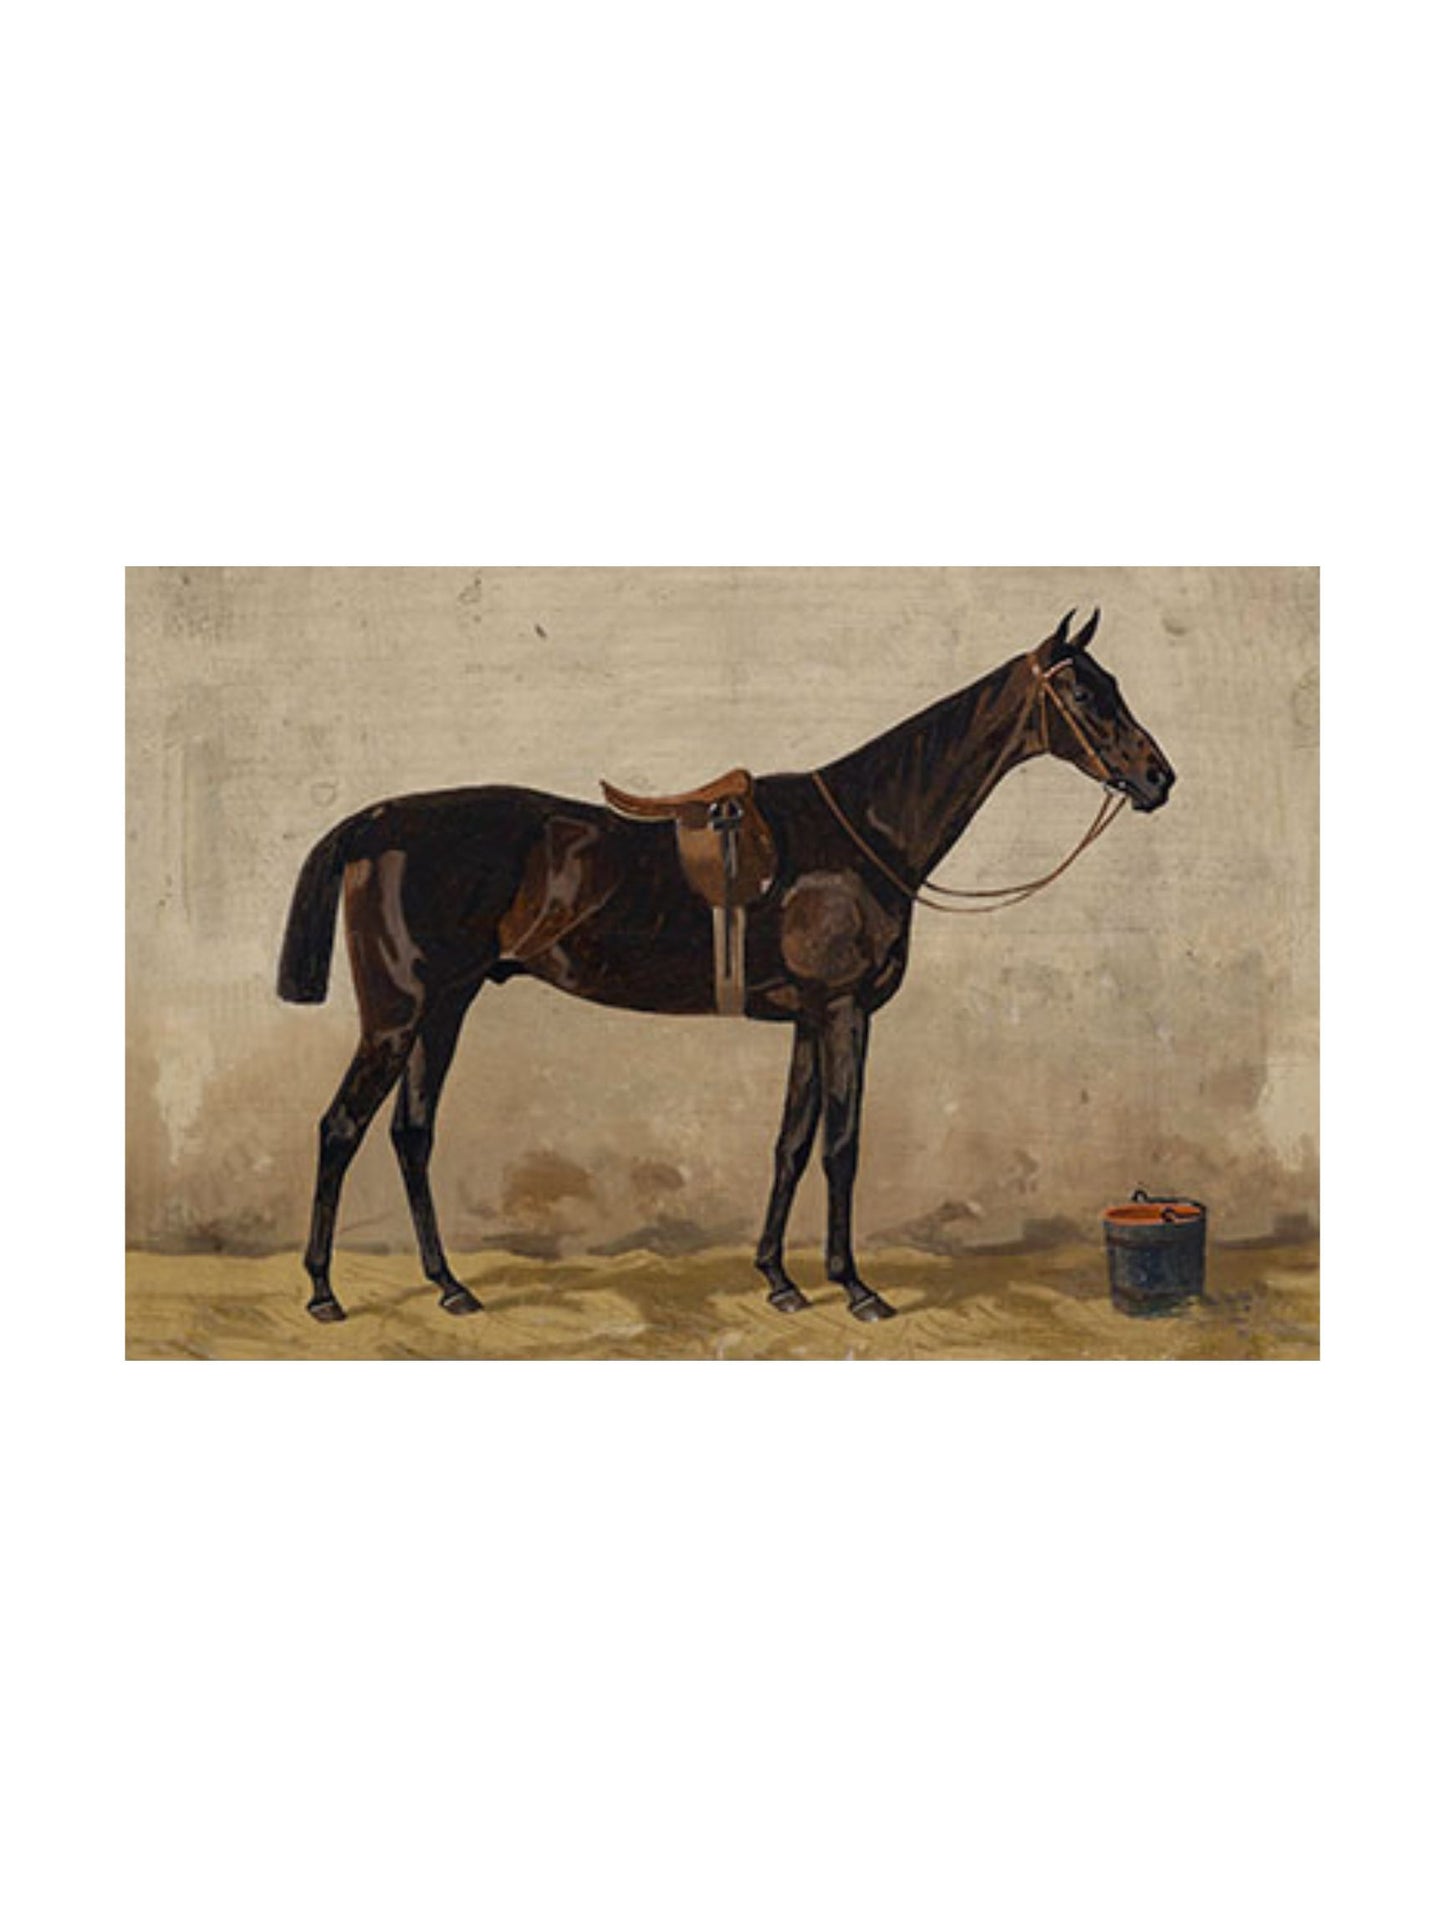 9x12" Keeneland Horse Print